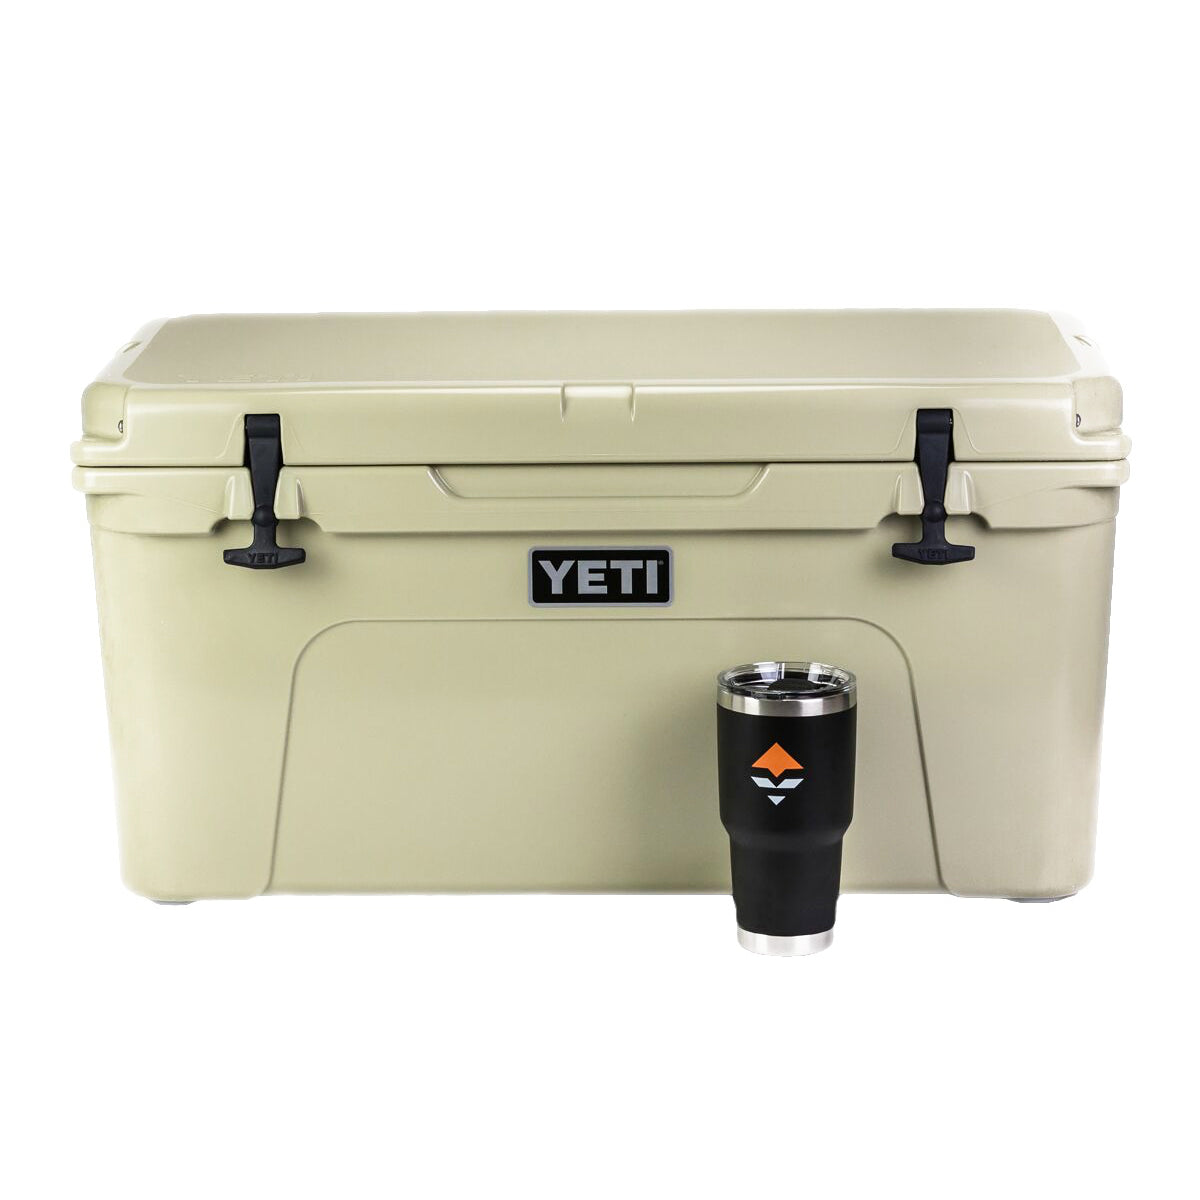 YETI Tundra 75 Cooler & Free GOHUNT Rambler in YETI Tundra 75 Cooler & Free goHUNT Rambler by YETI | Camping - goHUNT Shop by GOHUNT | YETI - GOHUNT Shop